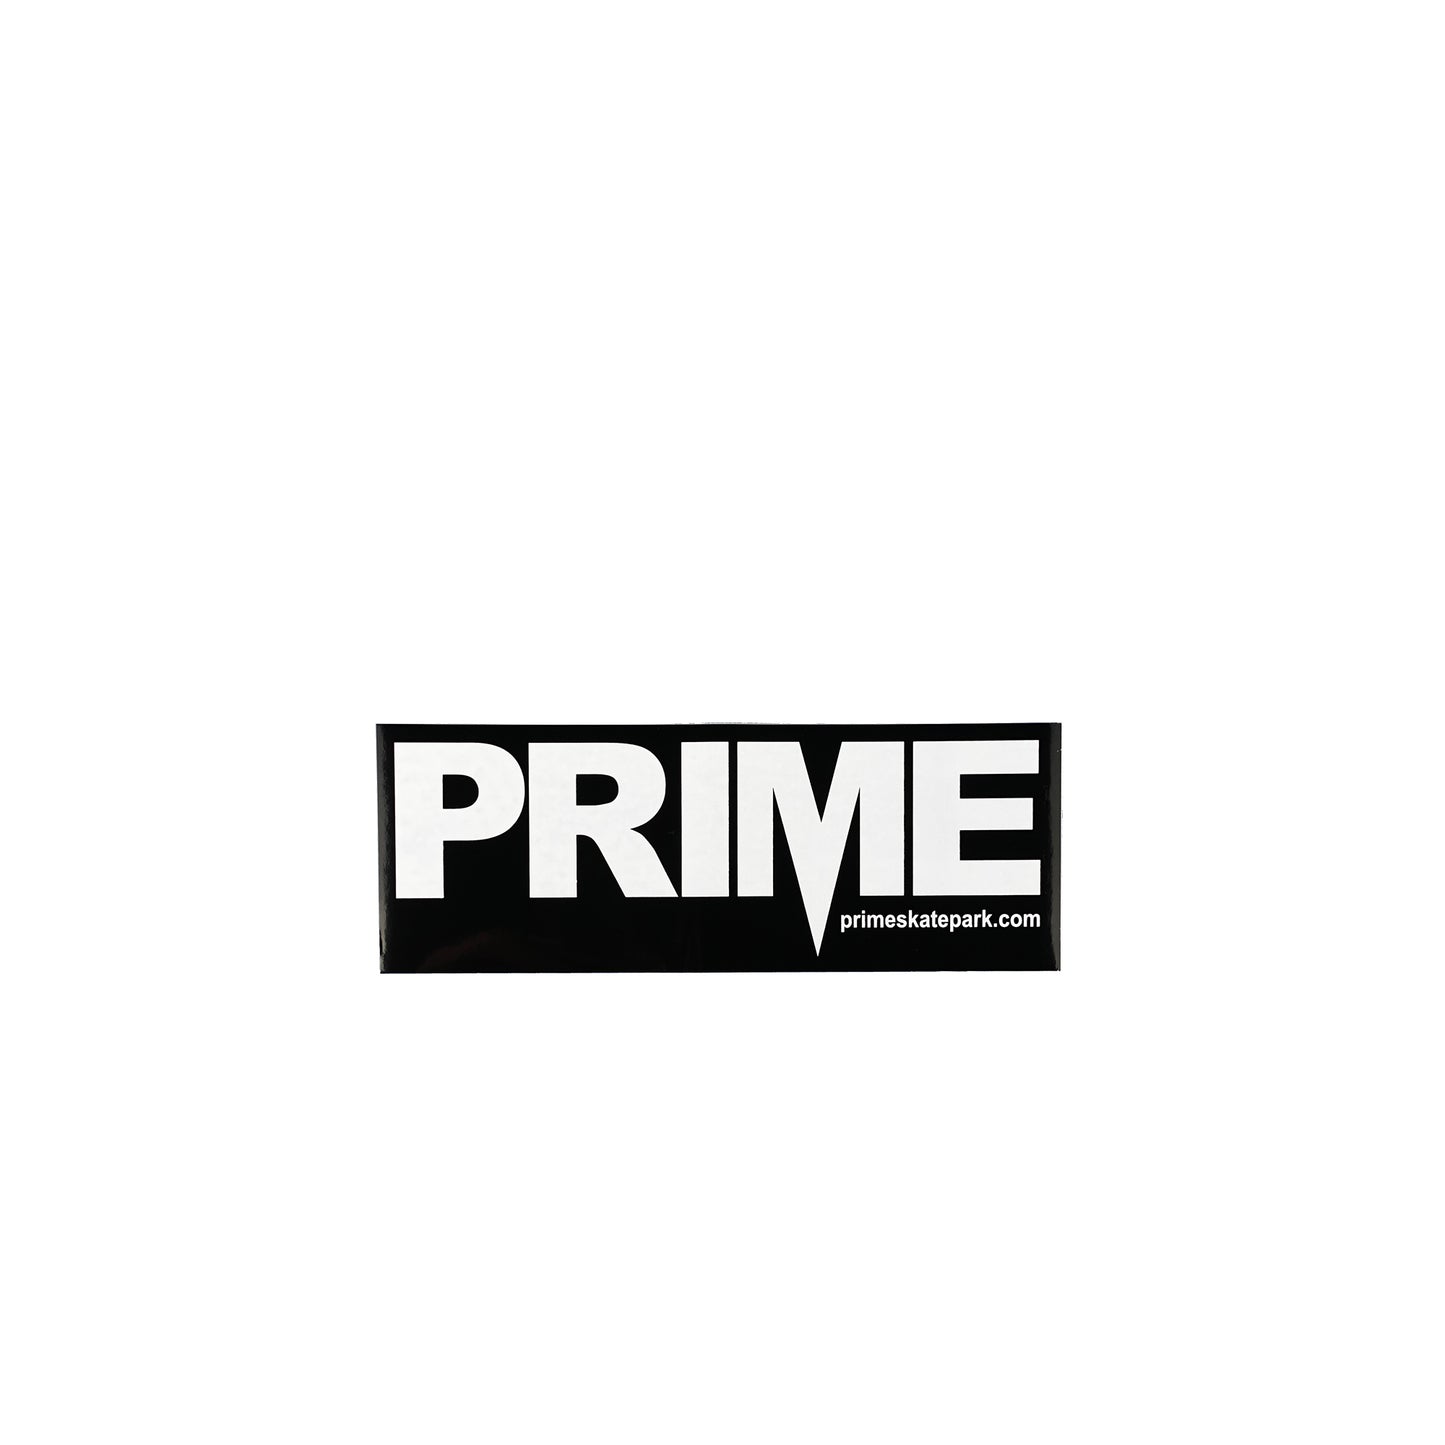 Prime Delux OG SP Sticker M - Black / White - Prime Delux Store